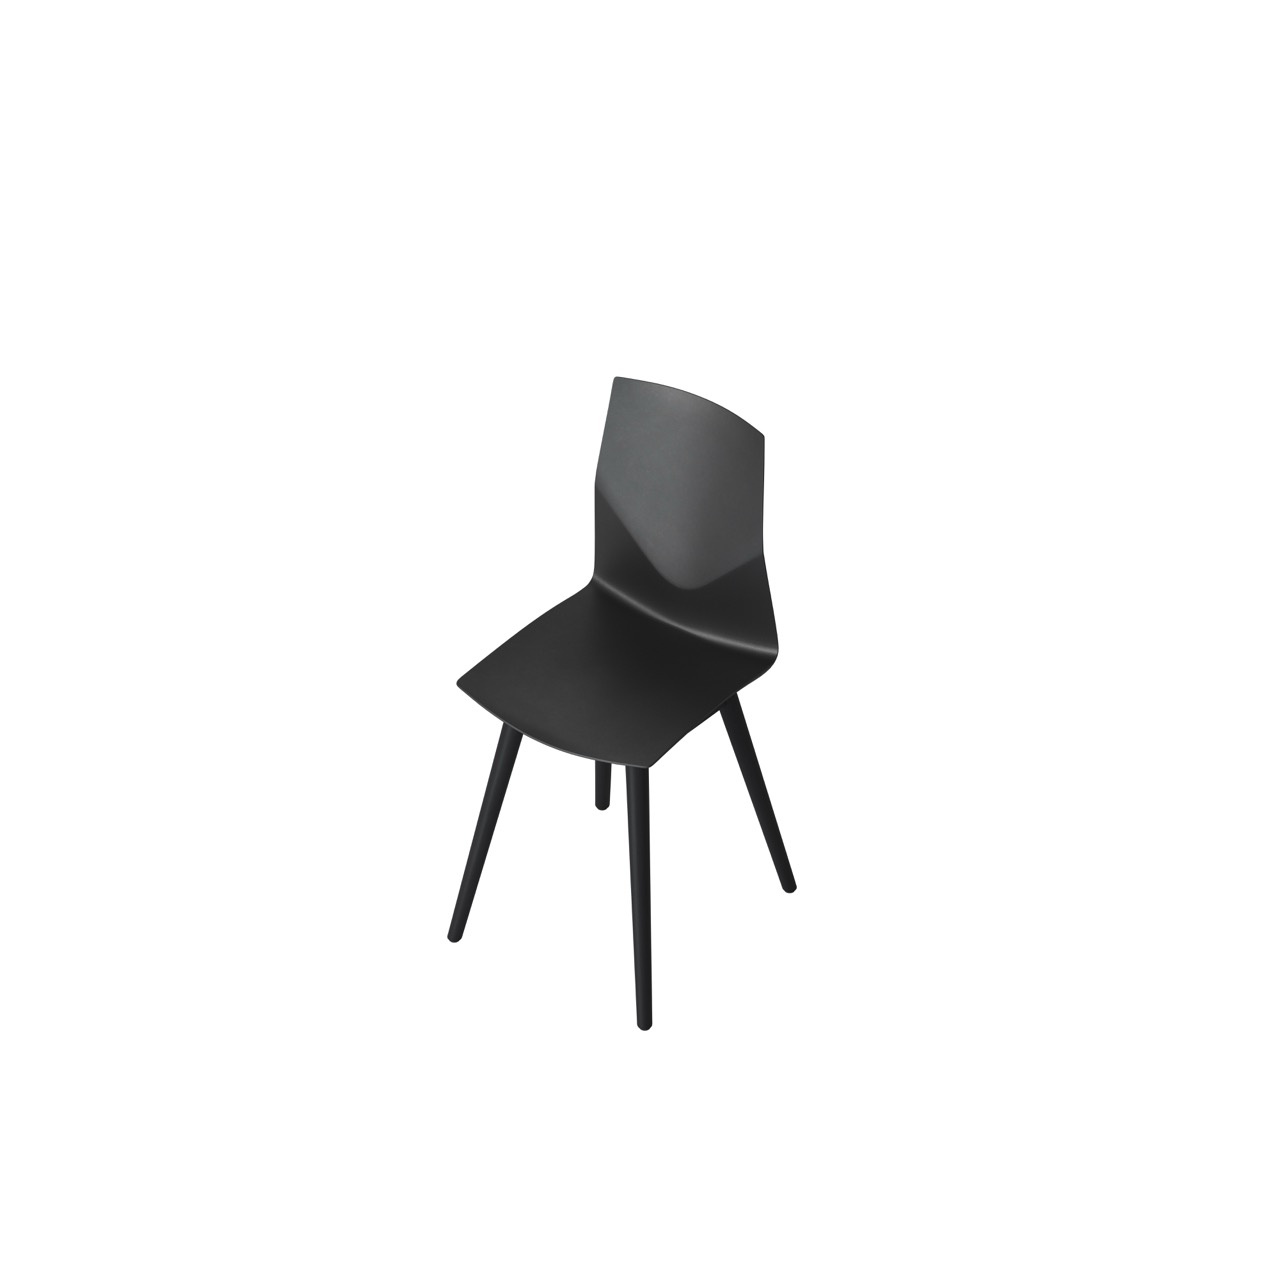 OCEE&FOUR – Chairs – FourCast 2 Four – Plastic shell - Black oak frame - Packshot Image 5 Large